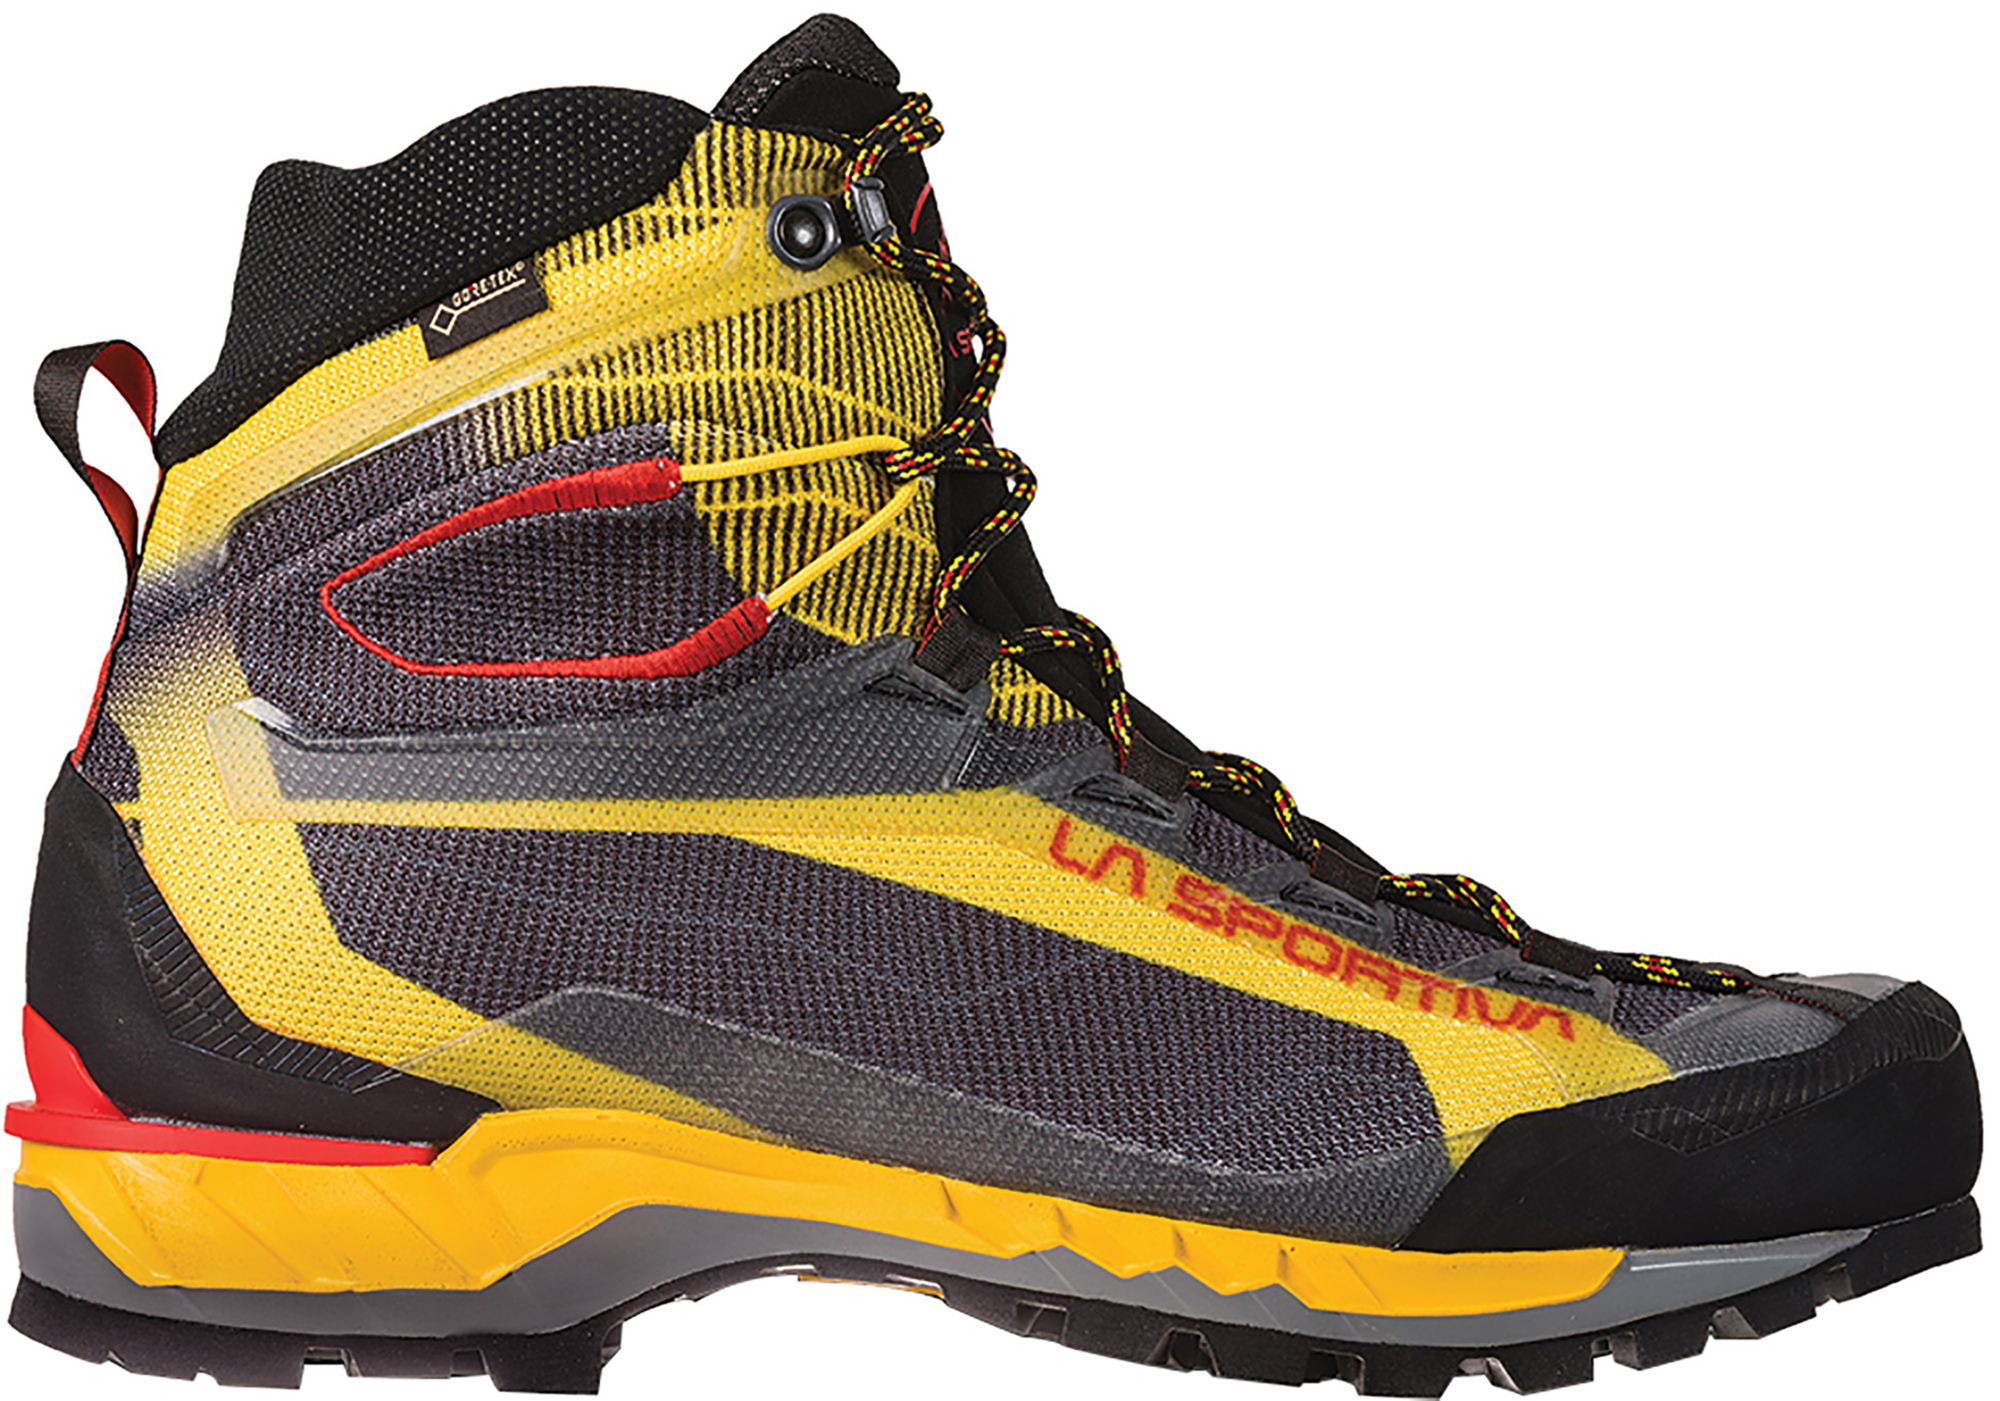 Photos - Trekking Shoes La Sportiva Men's Trango Tech GTX Hiking Boots, Size 45, Black/Yellow 21QP 